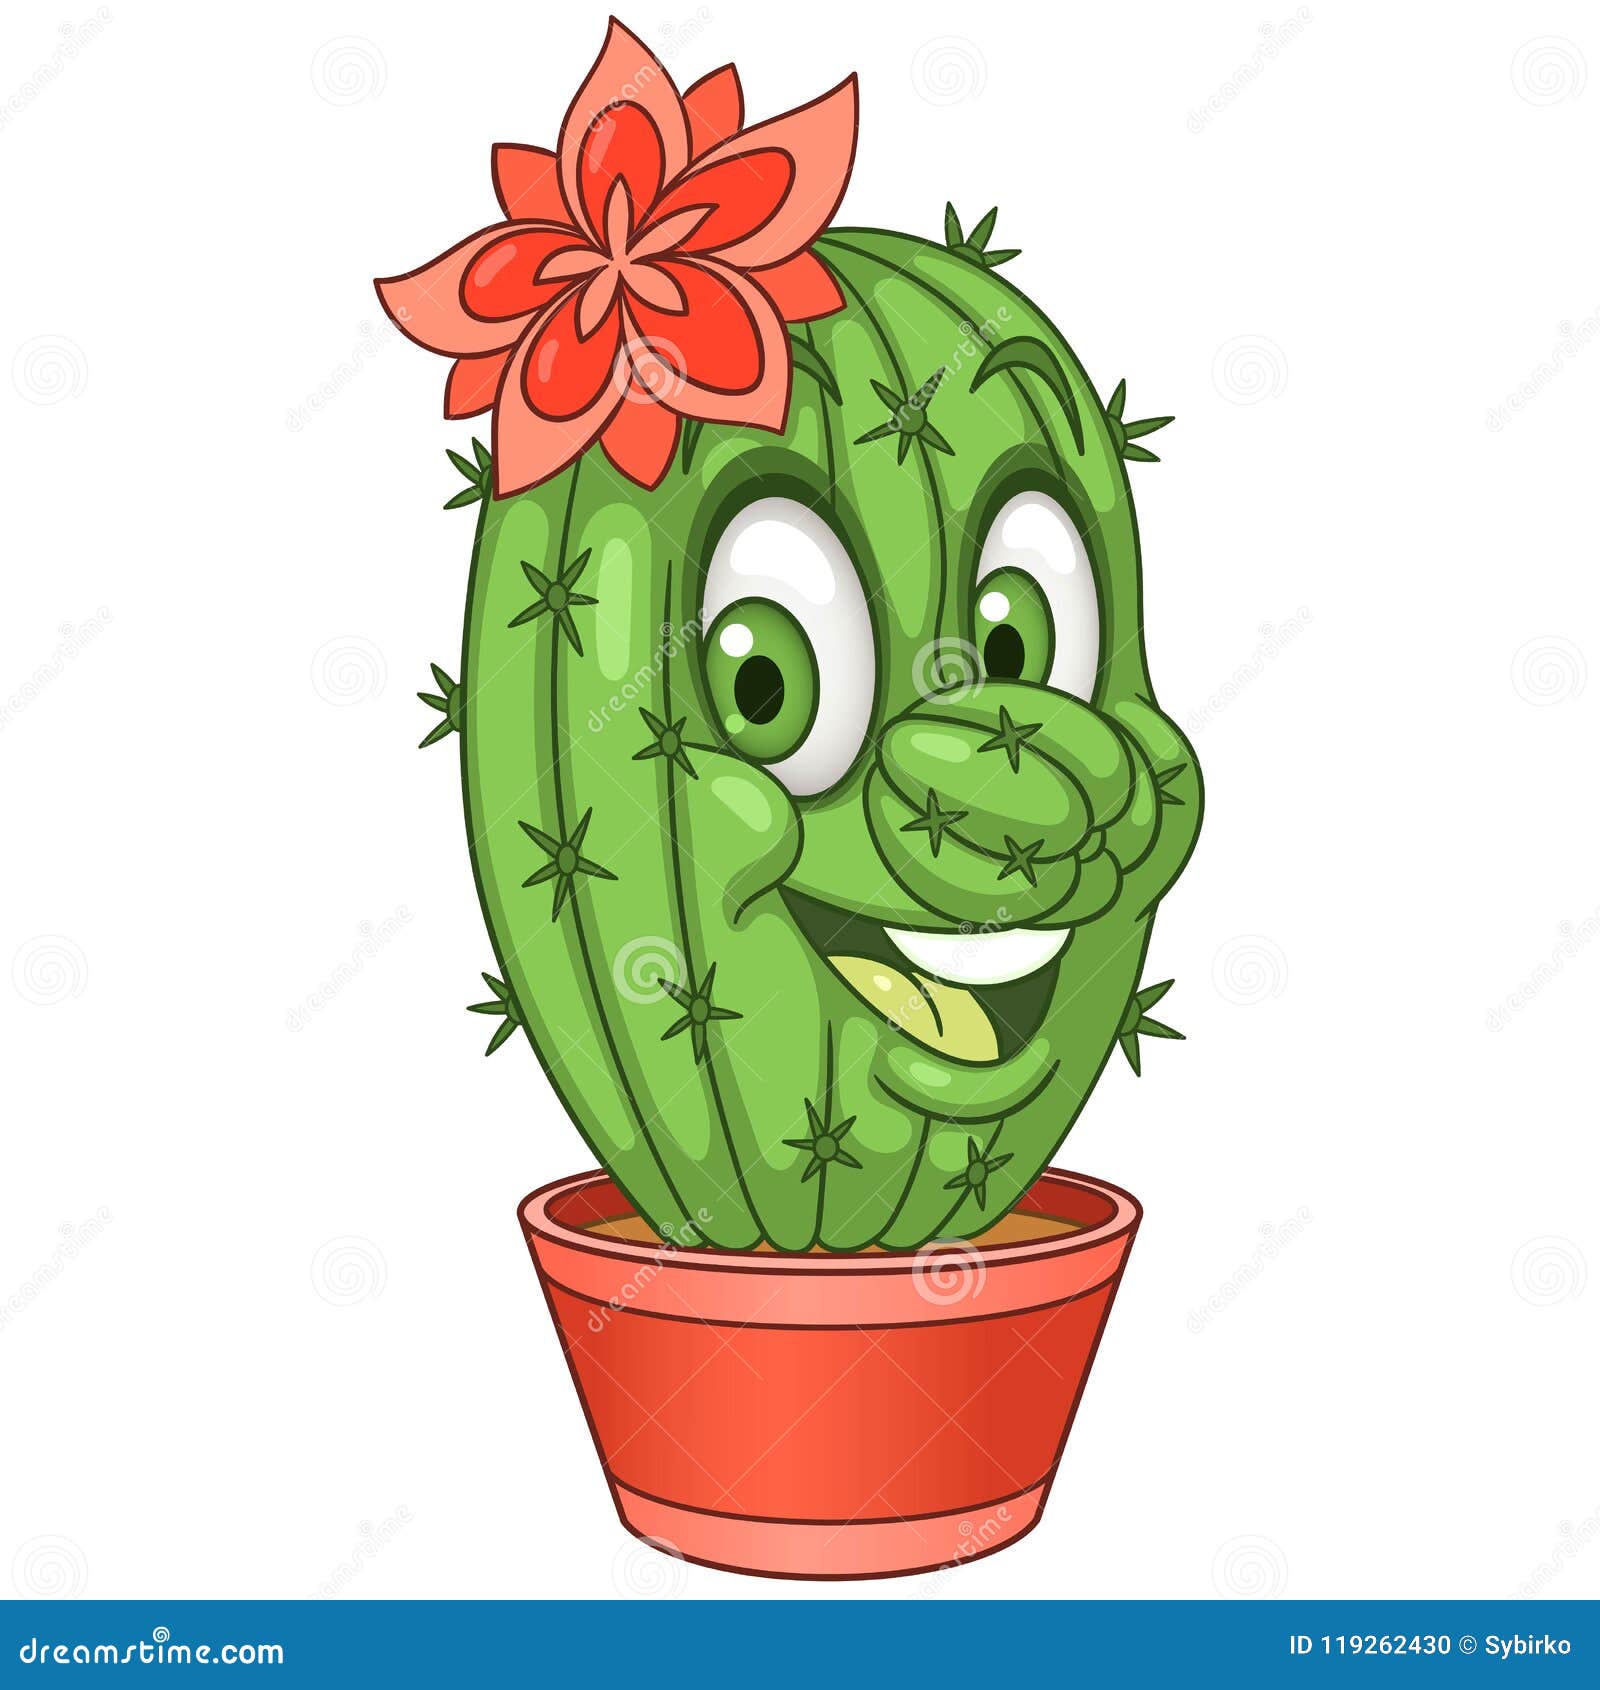 Cartoon cactus flower stock vector. Illustration of emoji - 119262430